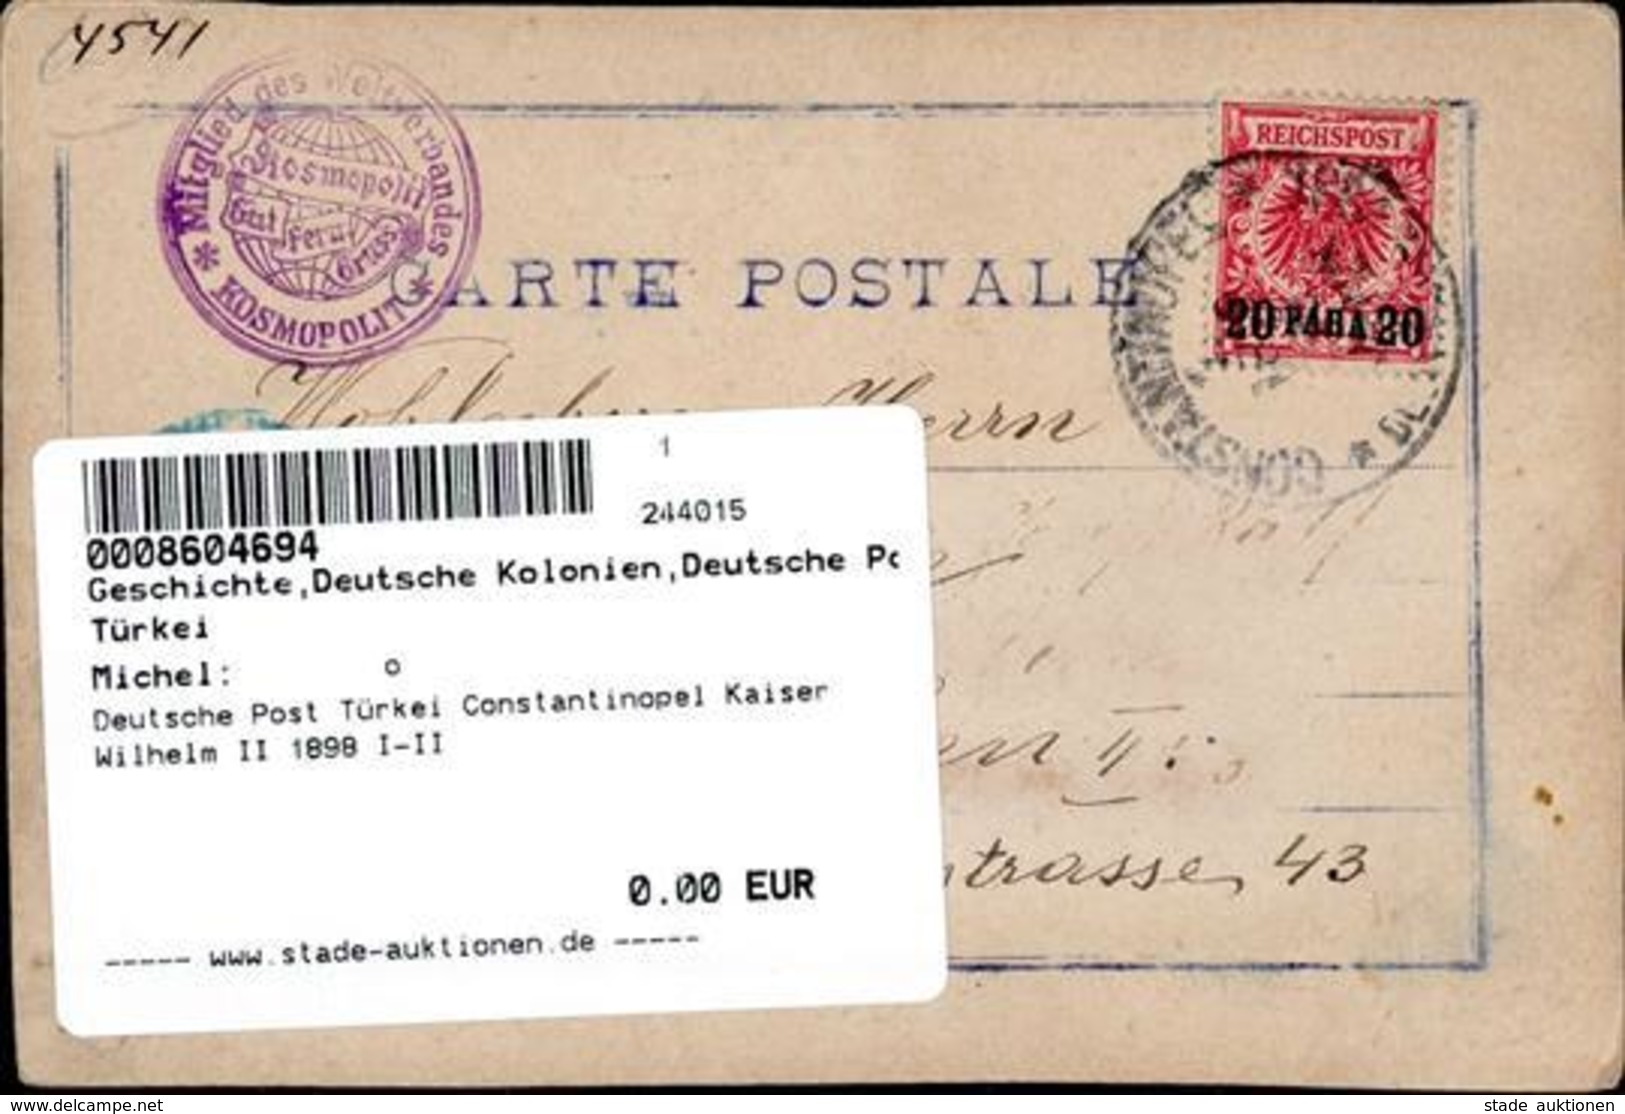 Deutsche Post Türkei Constantinopel Kaiser Wilhelm II 1898 I-II - Histoire